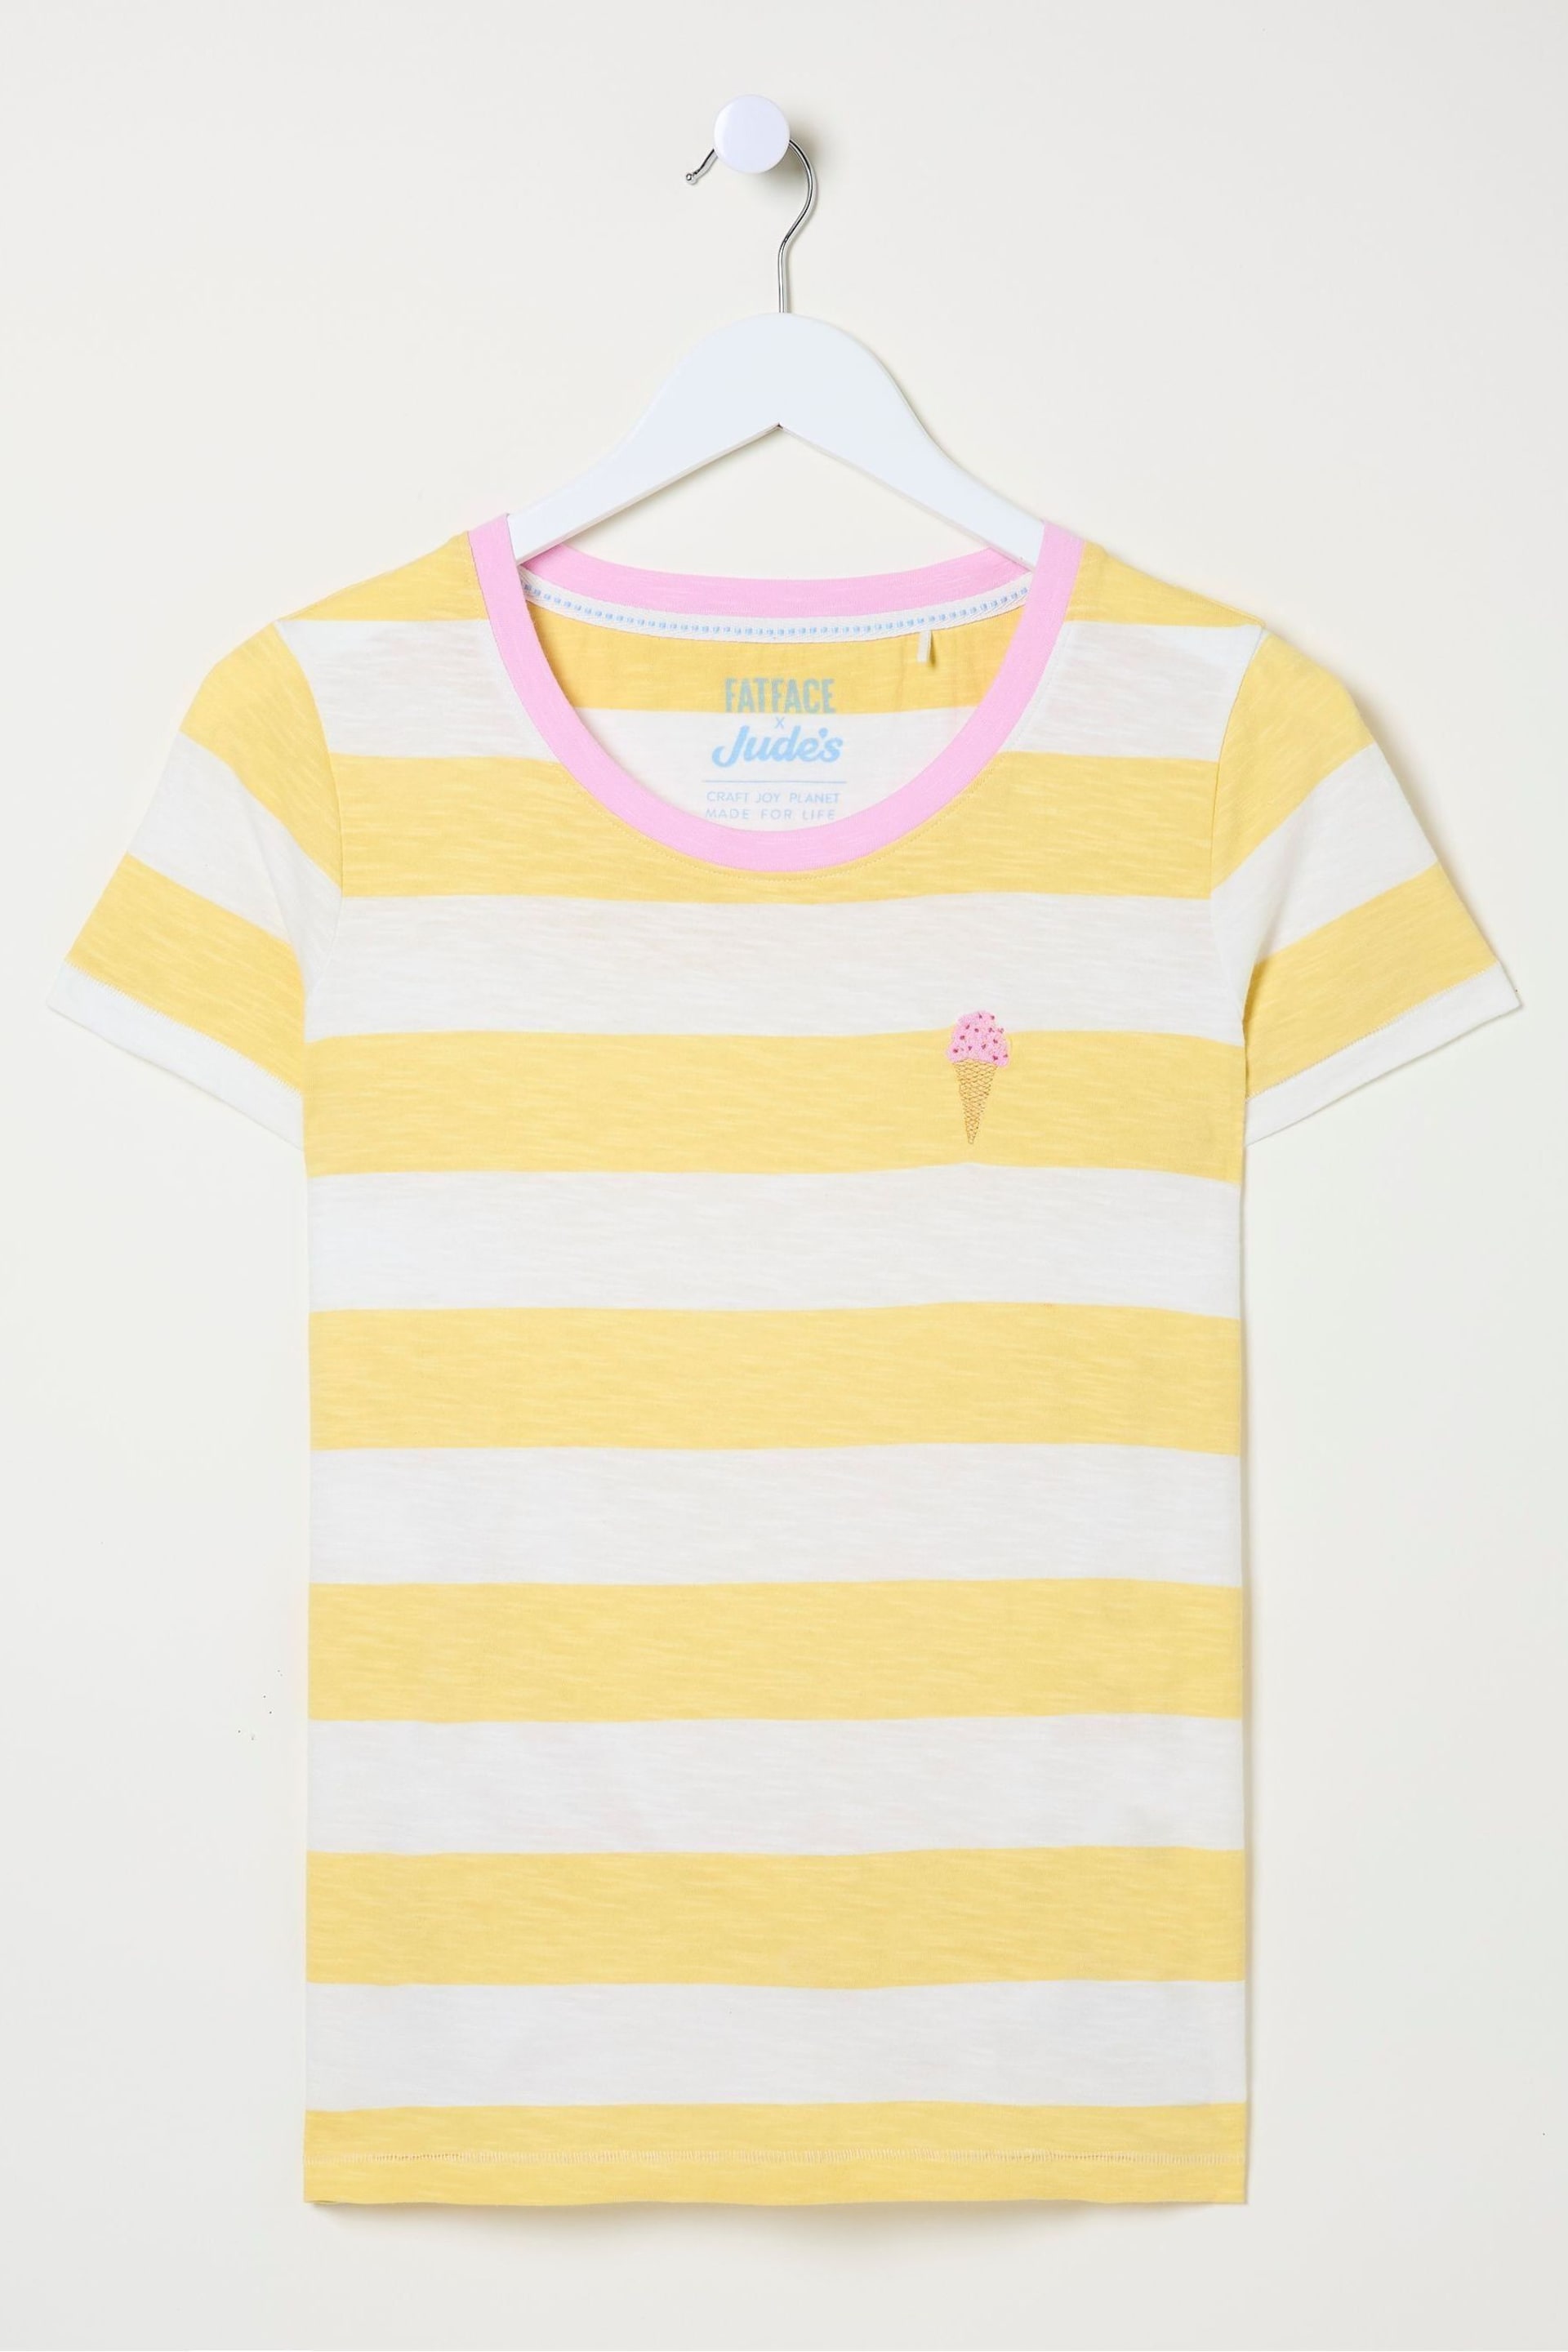 FatFace Yellow Judes Natalie Stripe T-Shirt - Image 7 of 7